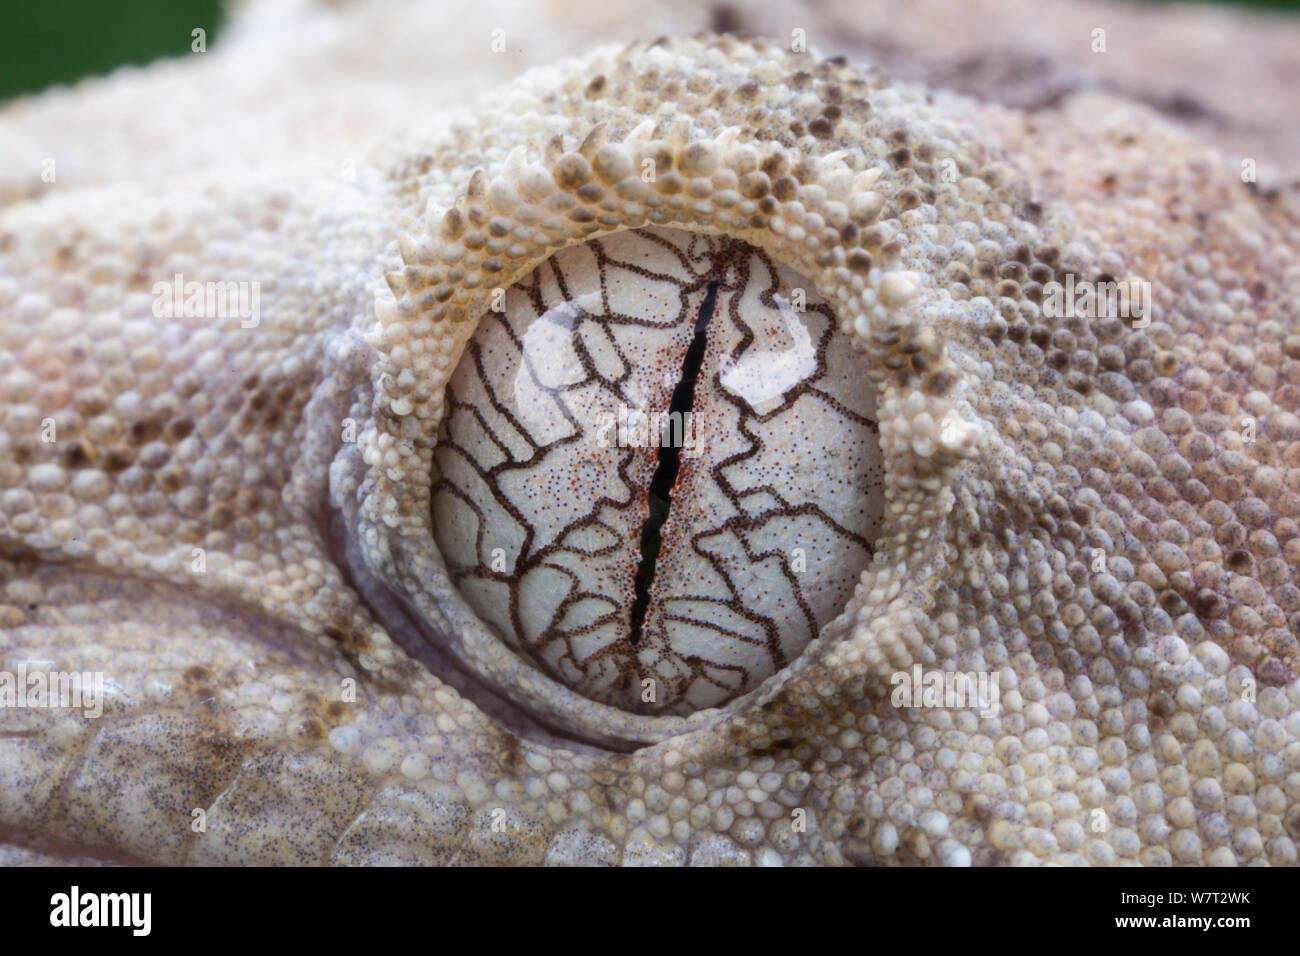 Moosige Neukaledonischen Gecko (Mniarogekko/Rhacodactylus chahoua) in der Nähe von Auge, Captive aus Neukaledonien. Stockfoto